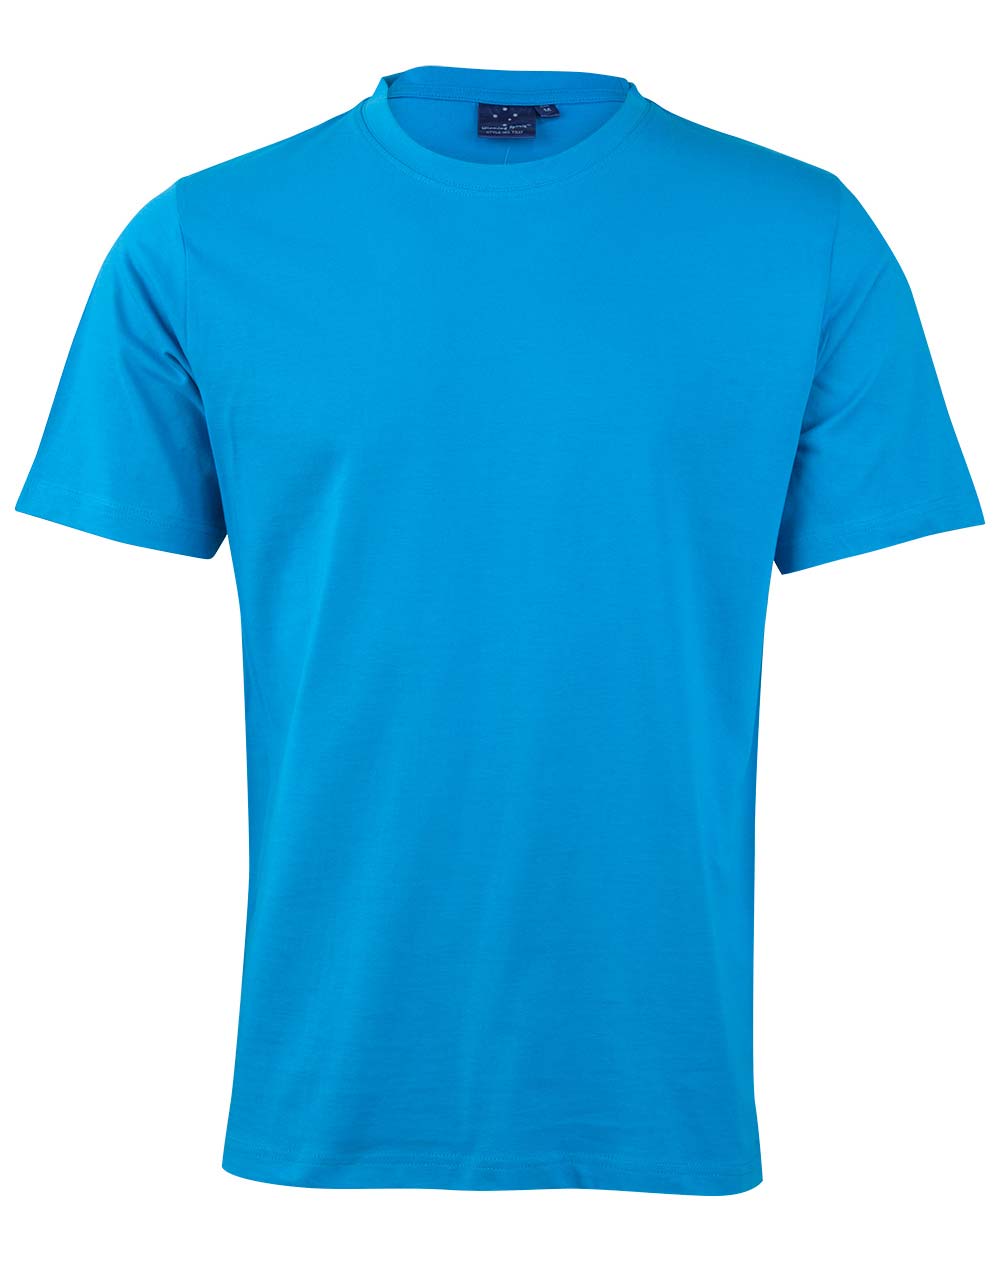 T Shirts : WINNING SPIRIT MENS MIDWEIGHT 185GM 100% COTTON SEMI FITTED ...